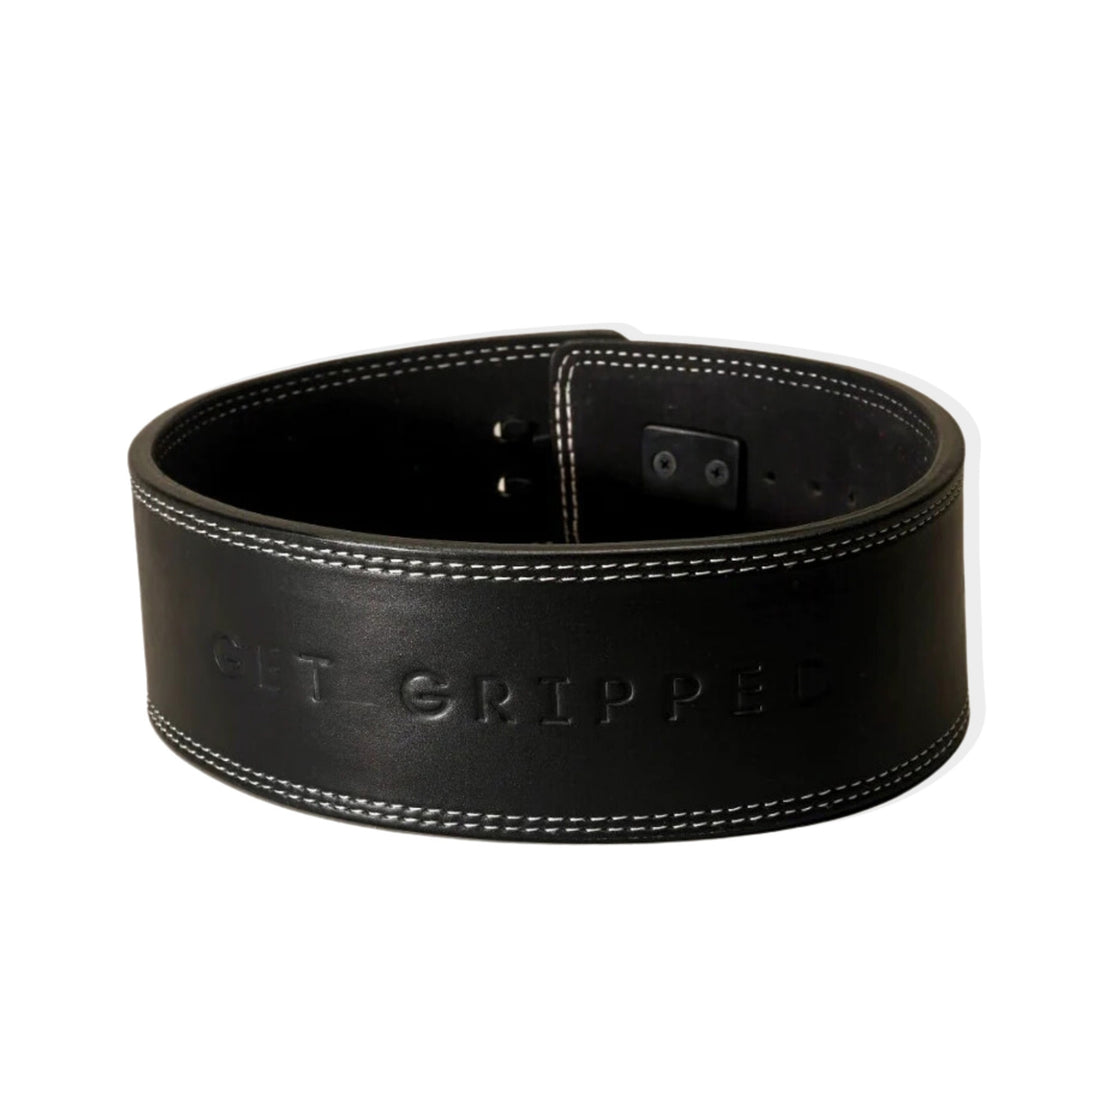 Get Gripped Leather 6 Belt Black